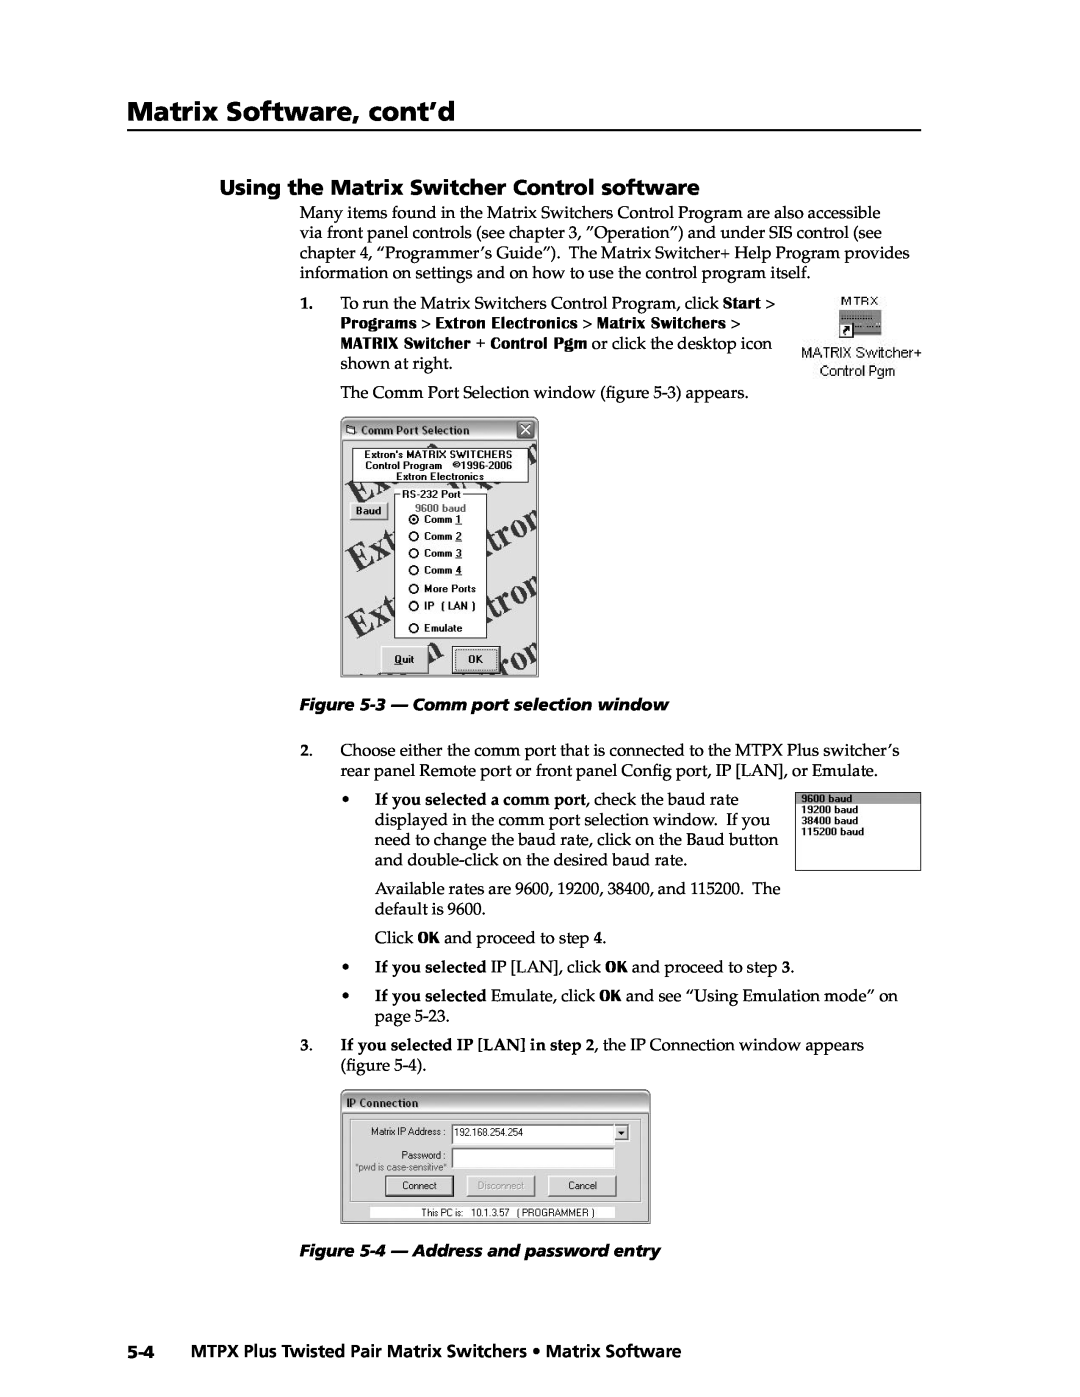 Extron electronic MTPX Plus Series manual Matrix Software, cont’d, Using the Matrix Switcher Control software 